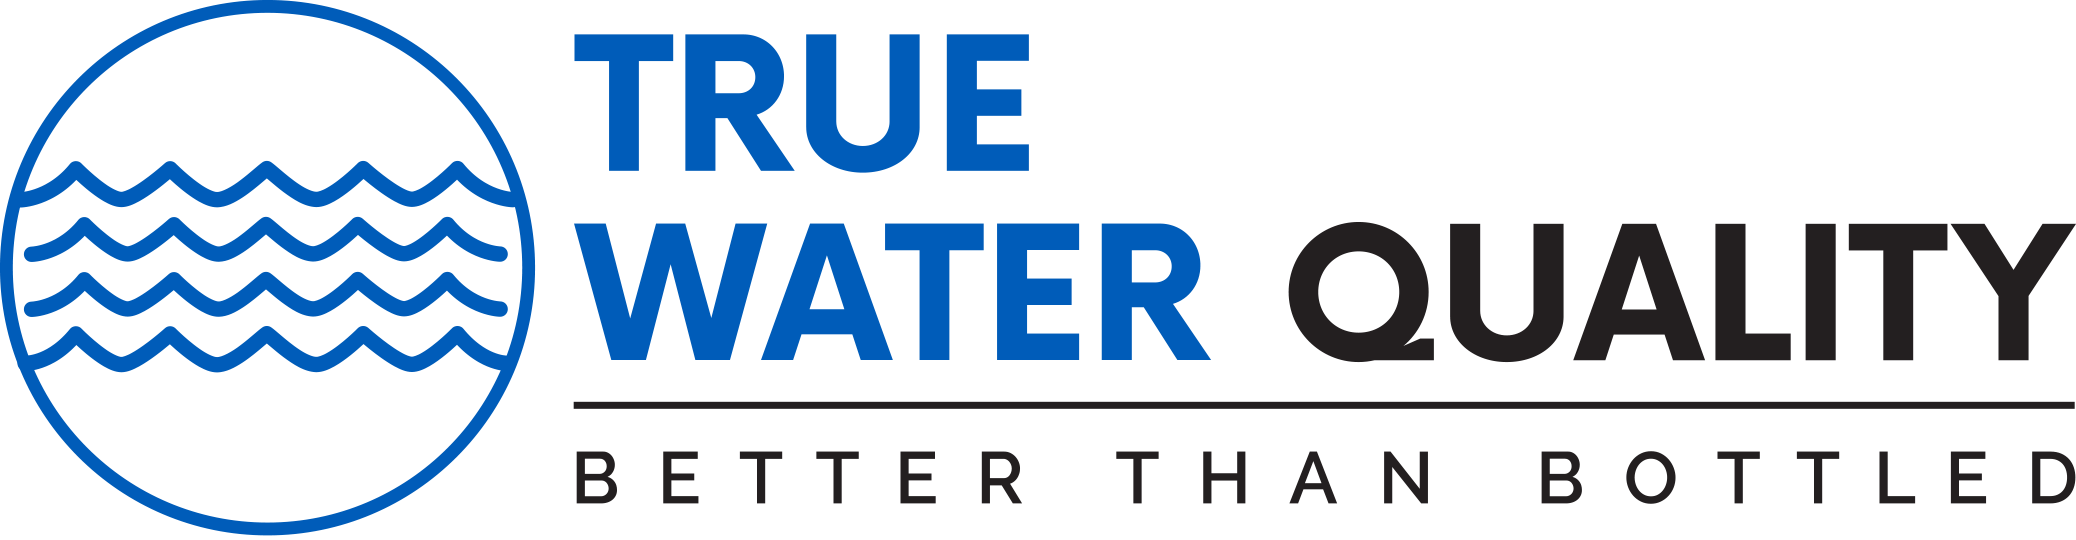 True Water Quality